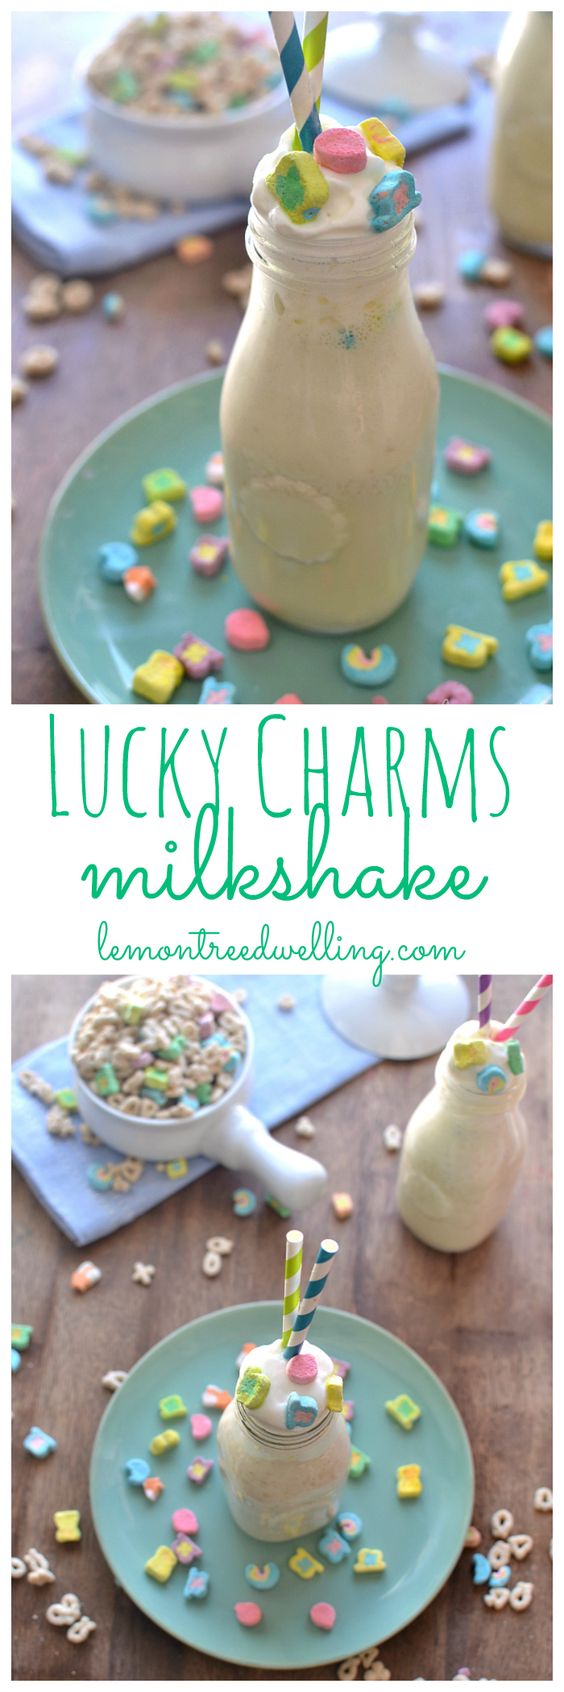 lucky charms milk shake